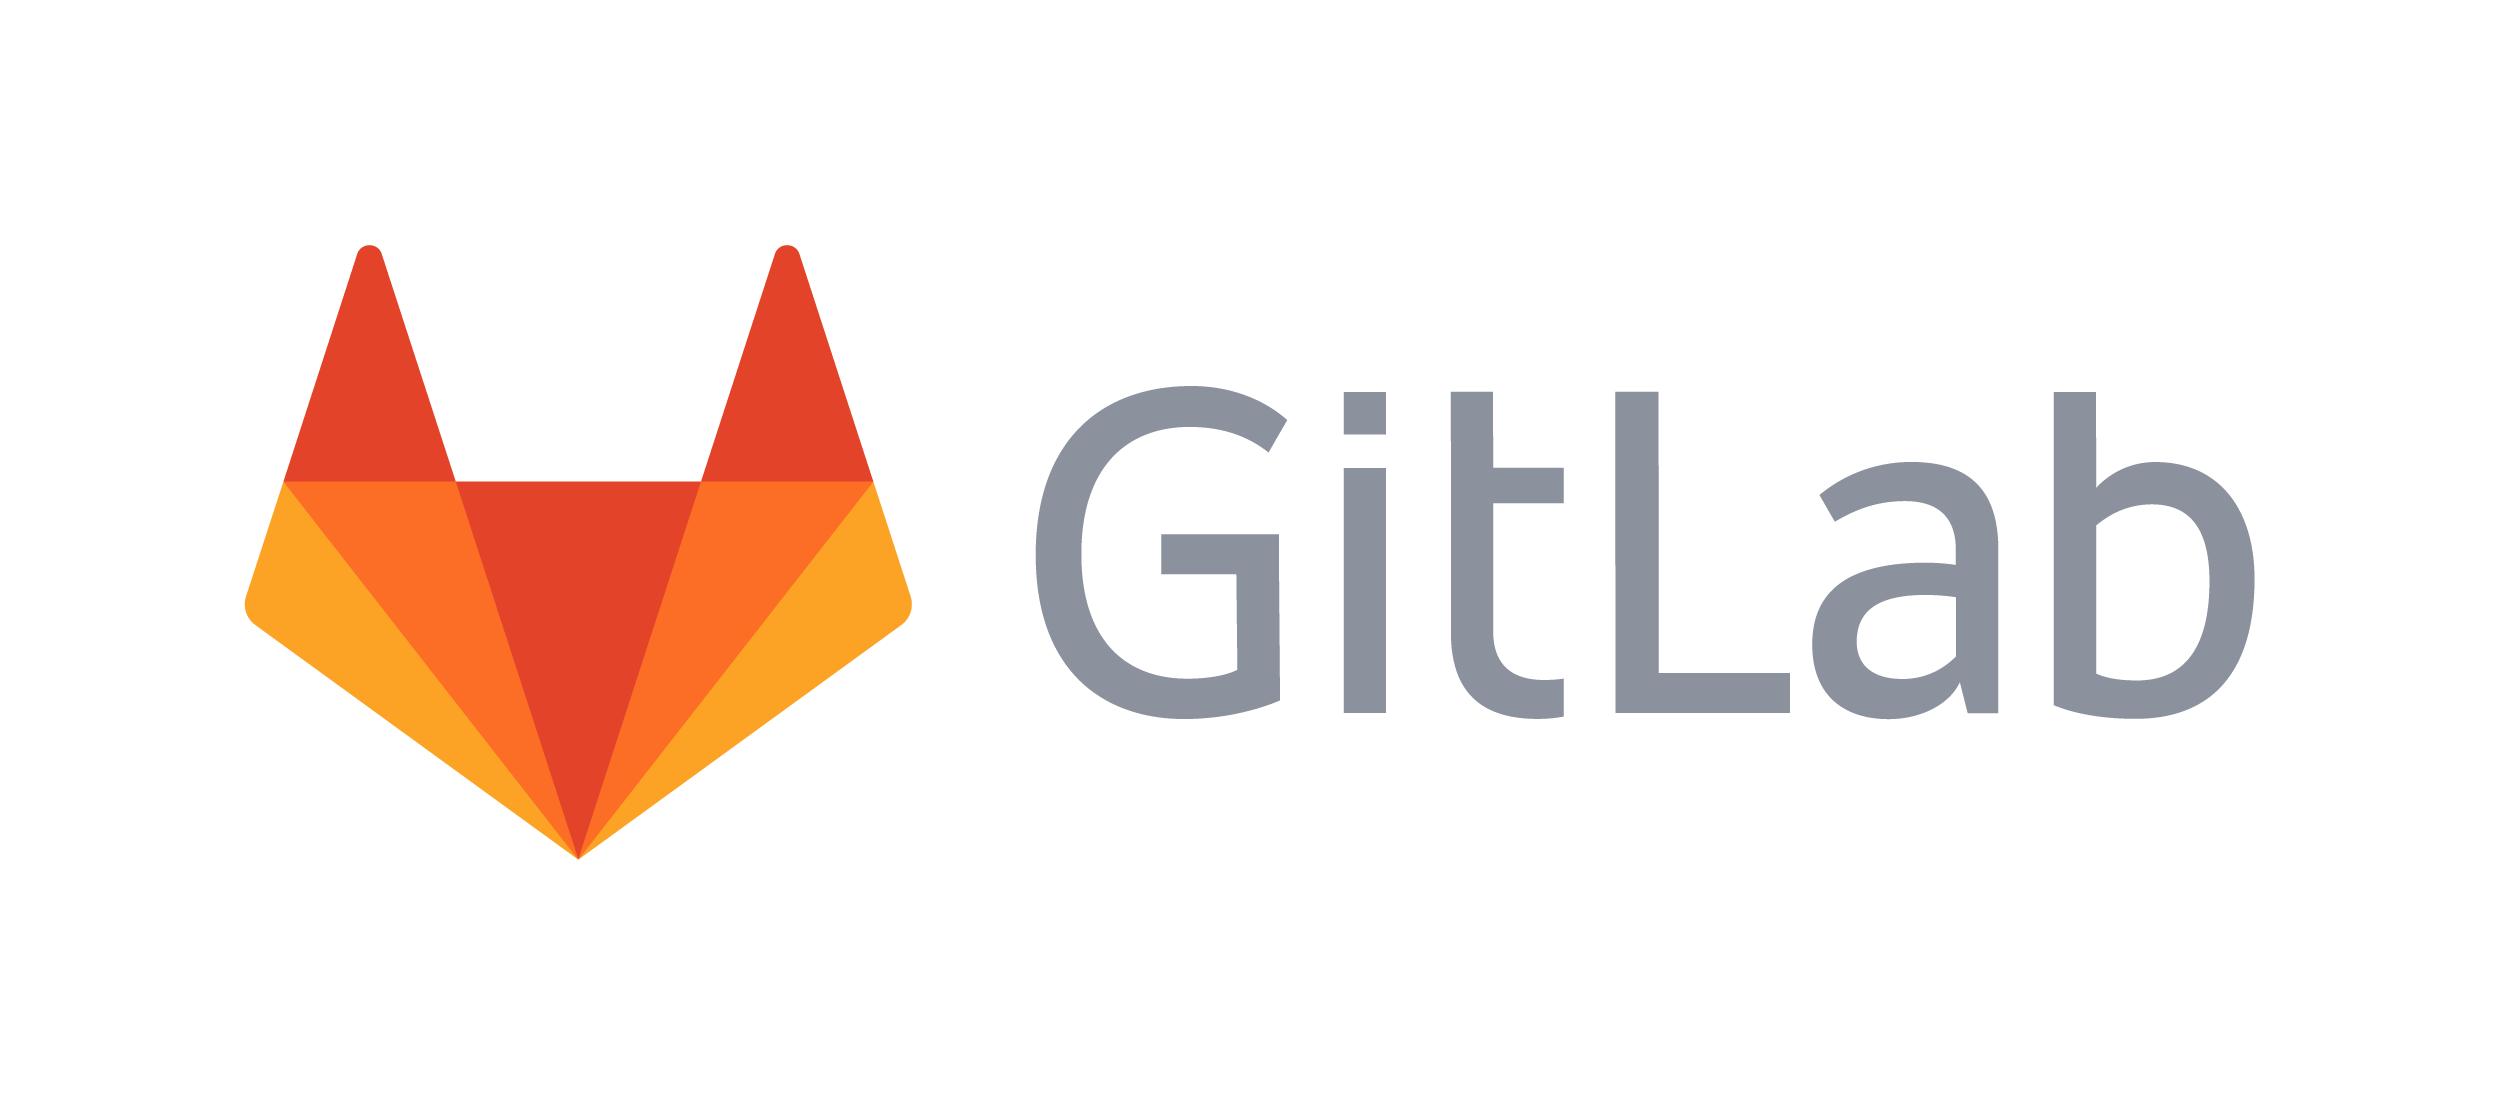 gitlab logo image